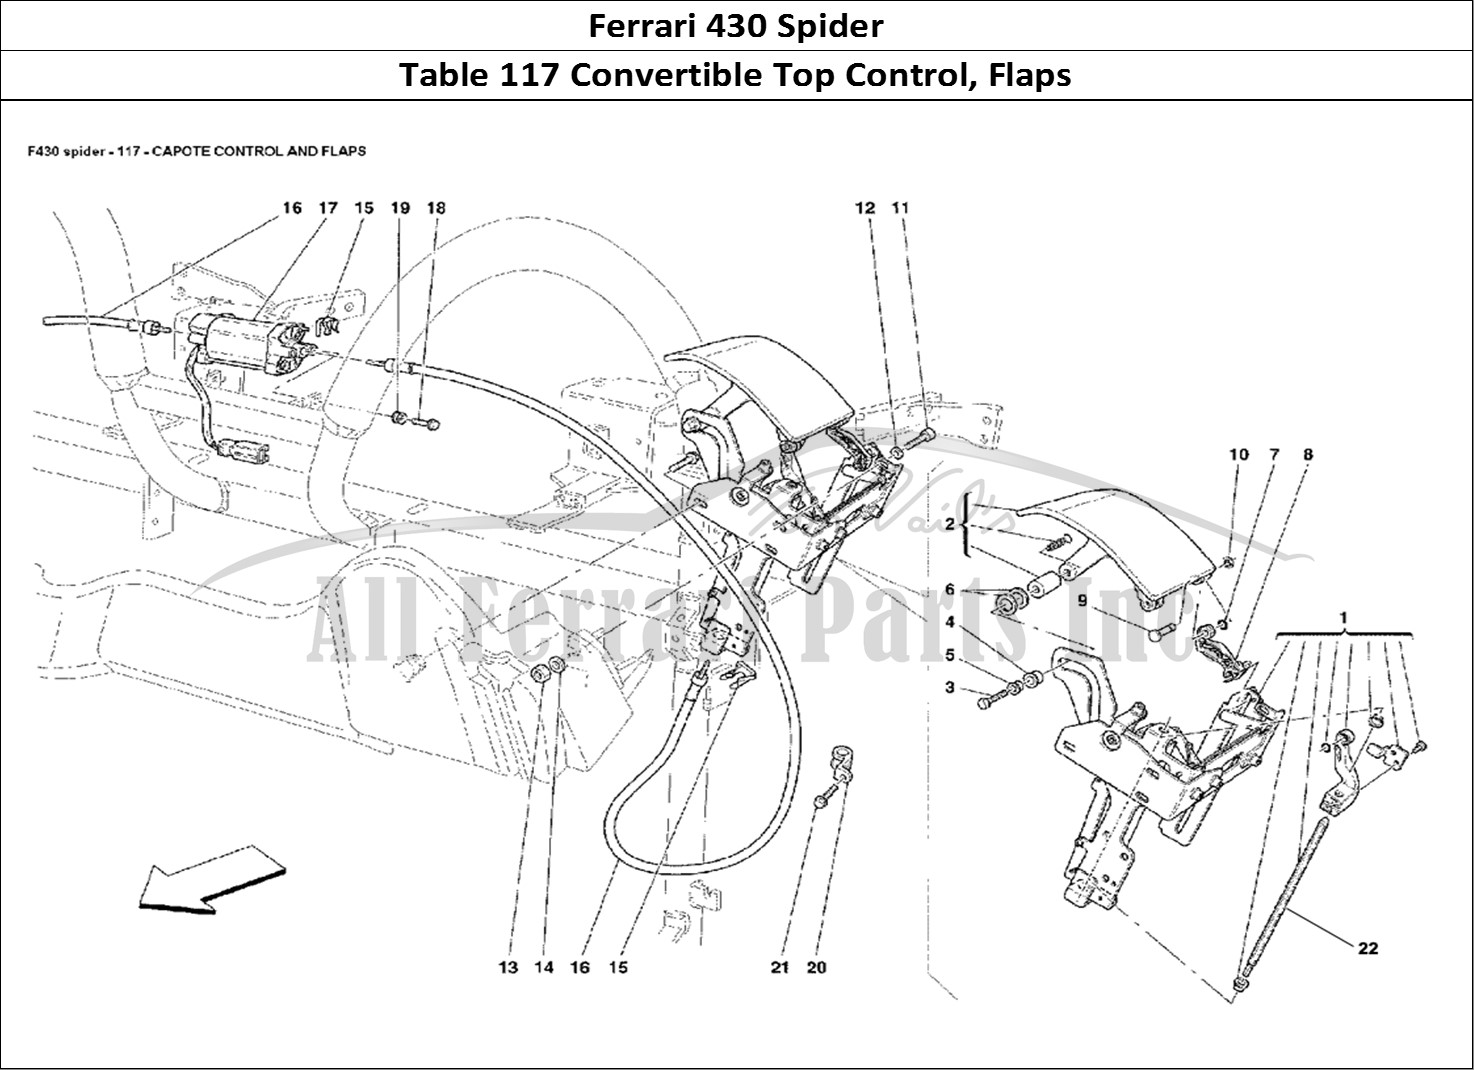 Ferrari Parts Ferrari 430 Spider Page 117 Capote Control and Flaps